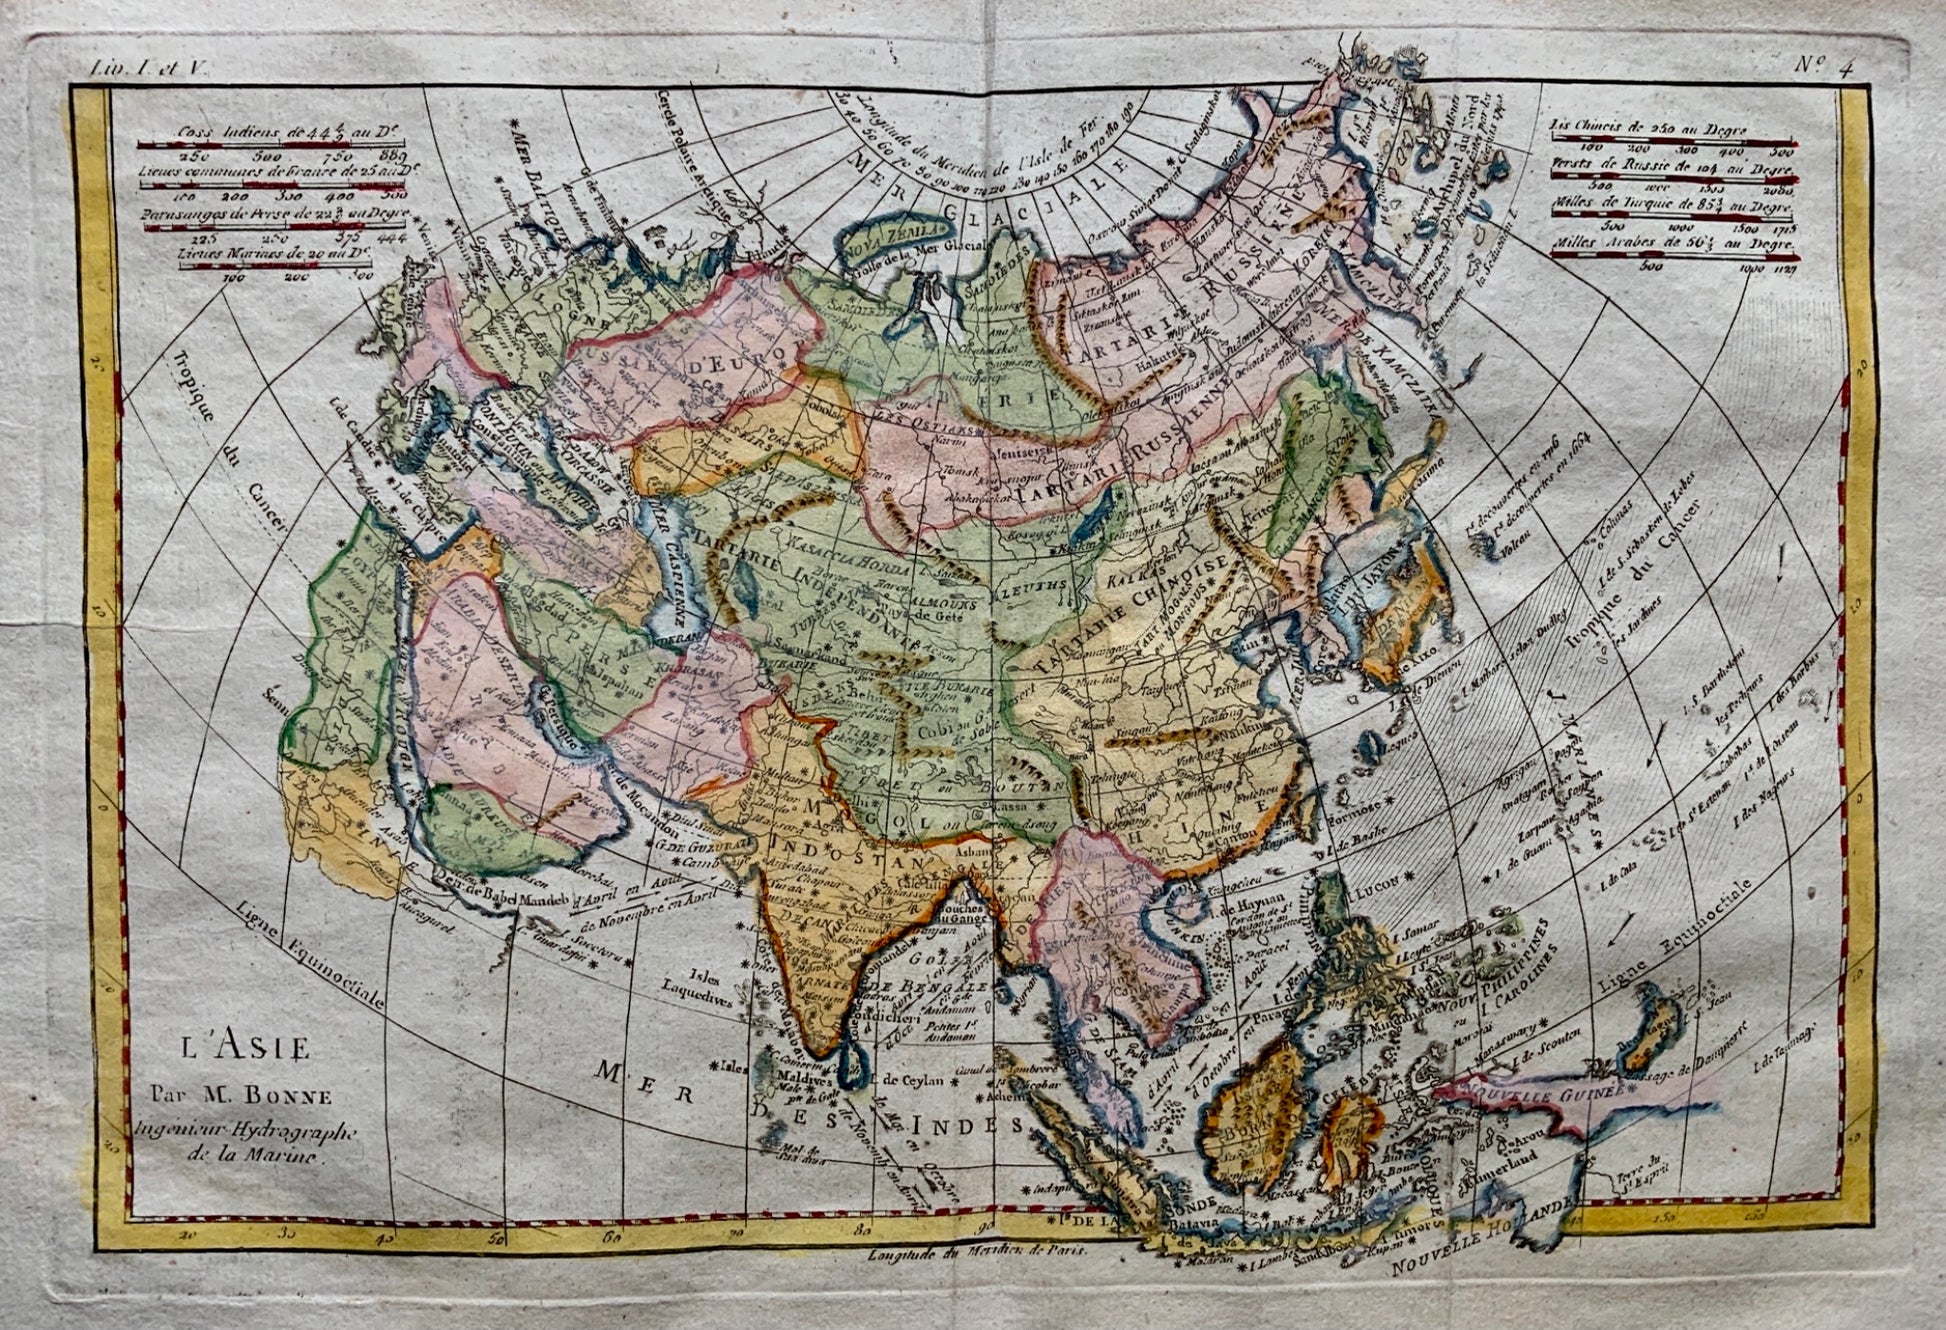 1780 Bonne - ASIA China, Russia, Siberia, India - hand coloured engraved map